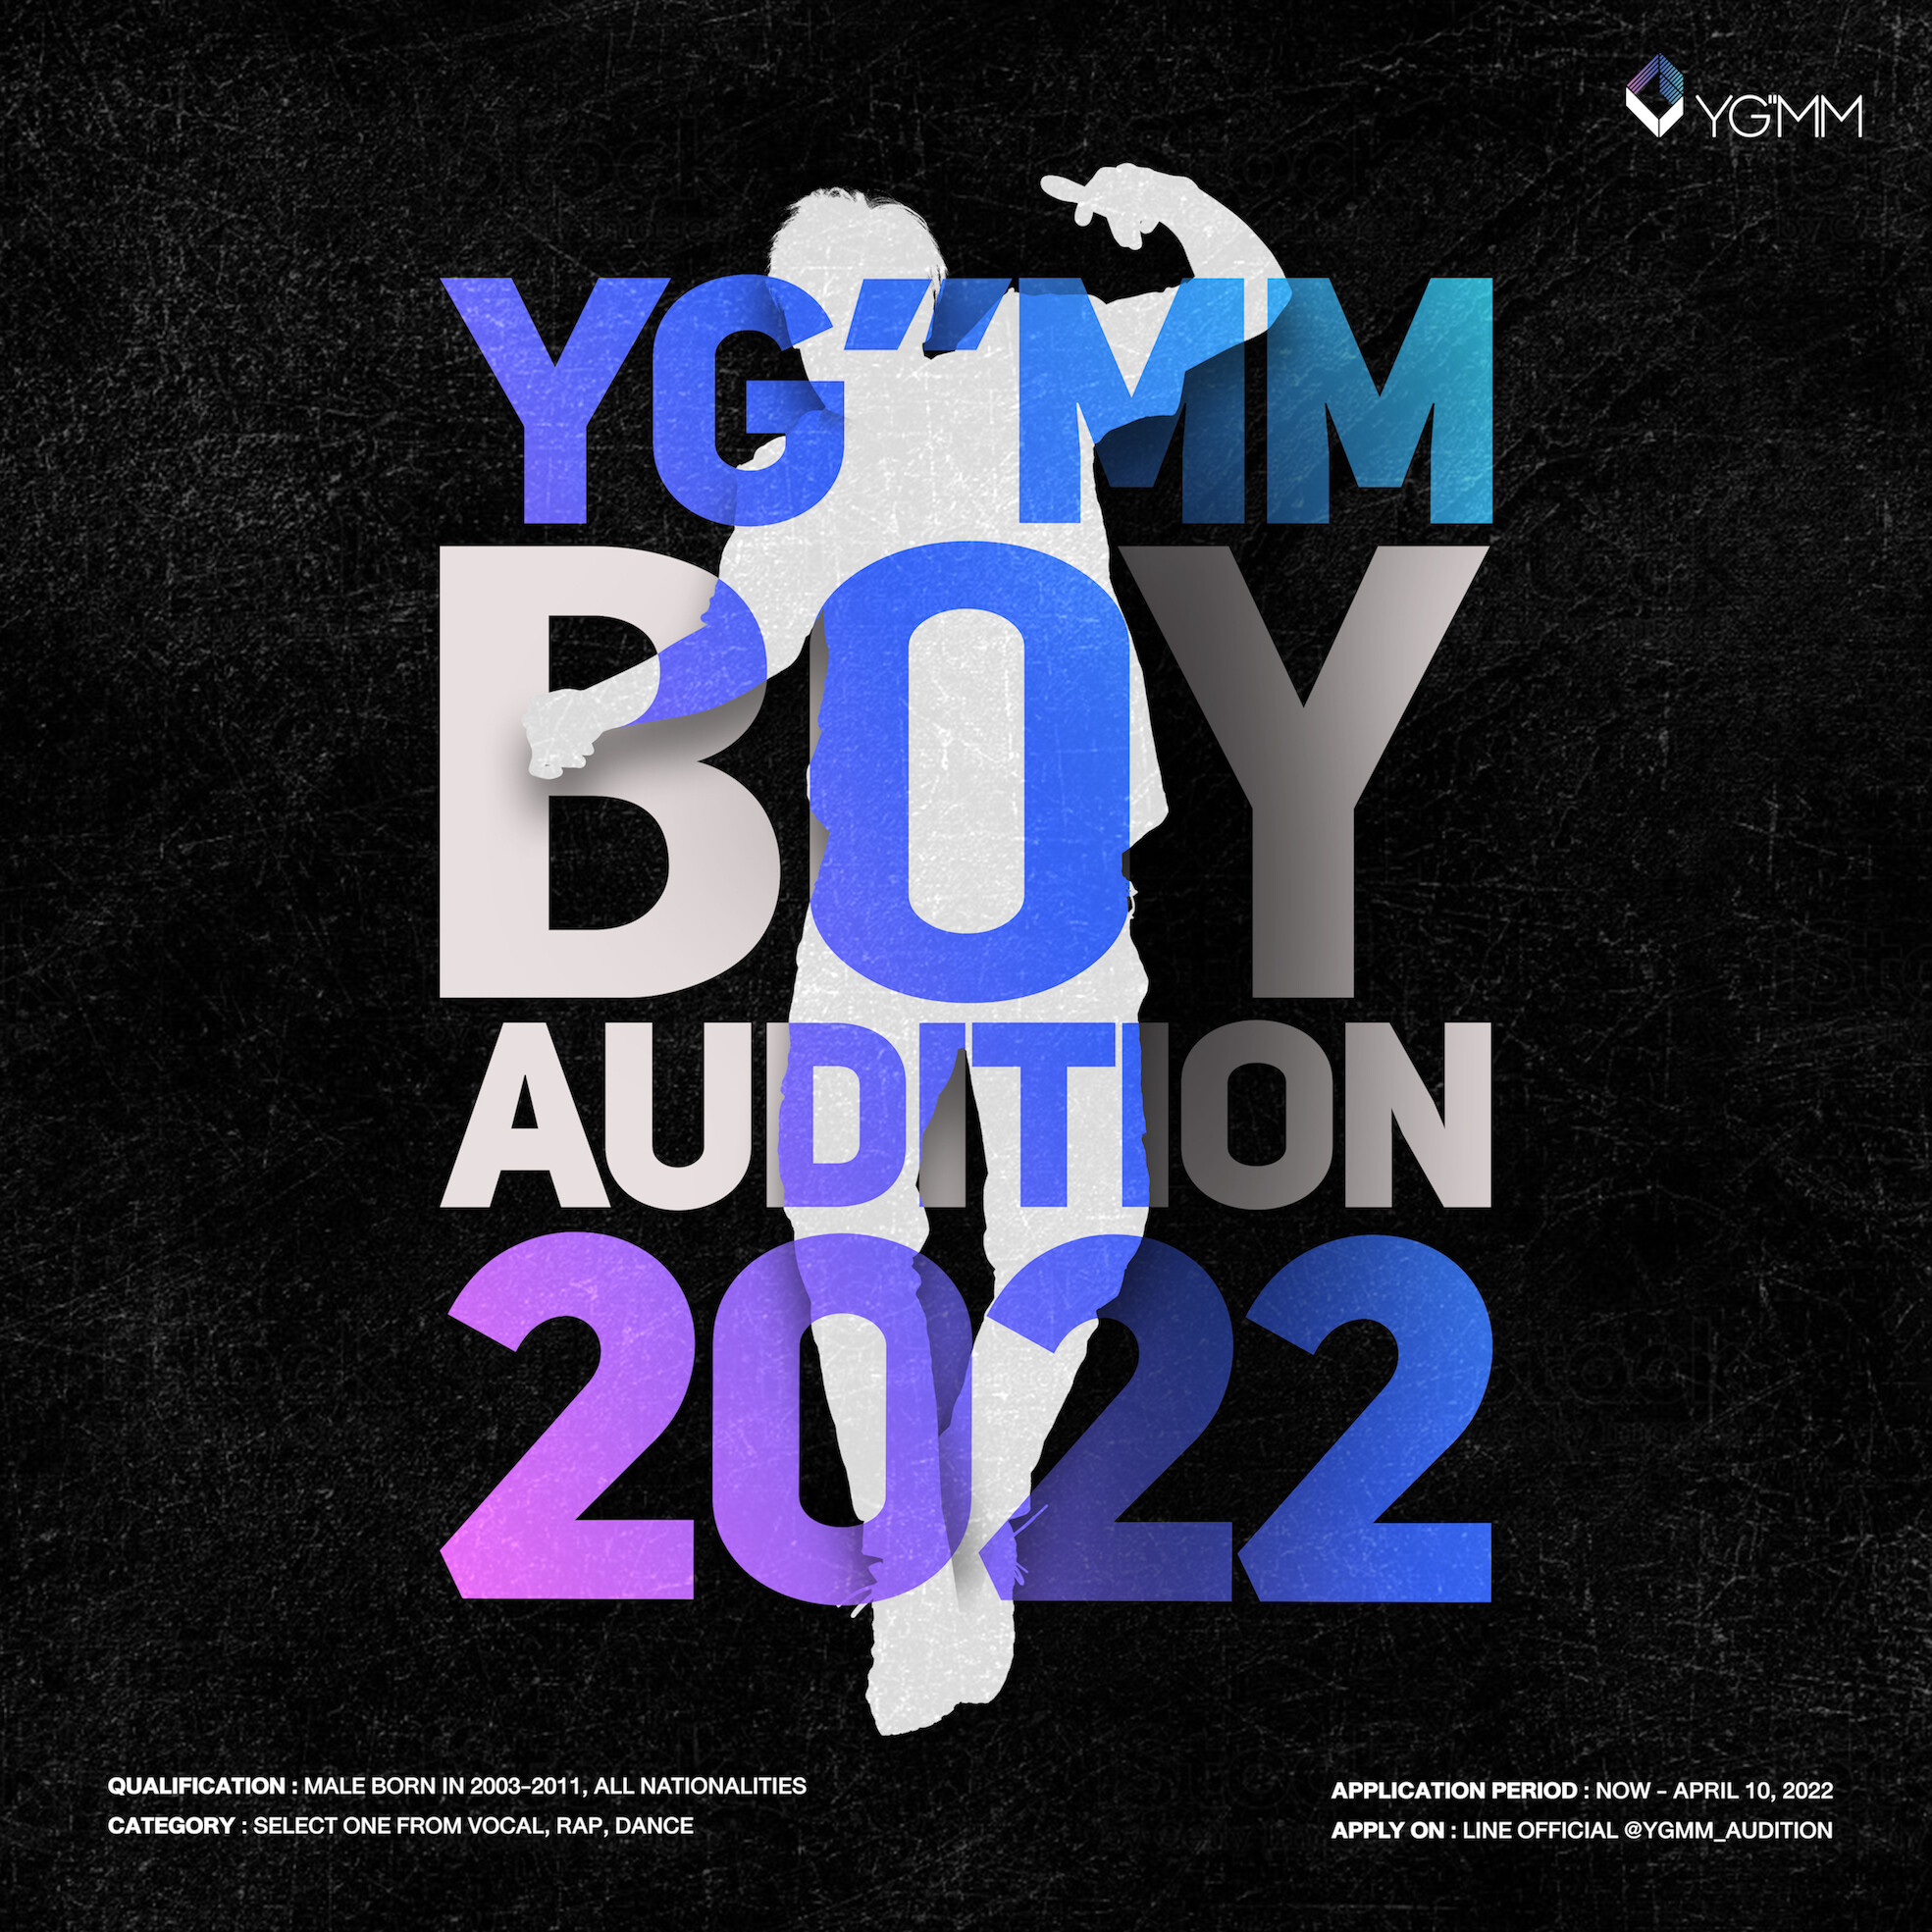 YG''MM เปิดโปรเจกต์ใหญ่ YG"MM Boy Audition 2022 ค้นหา Boy Trainee ทั่วโลกร่วมเป็นศิลปินฝึกหัด